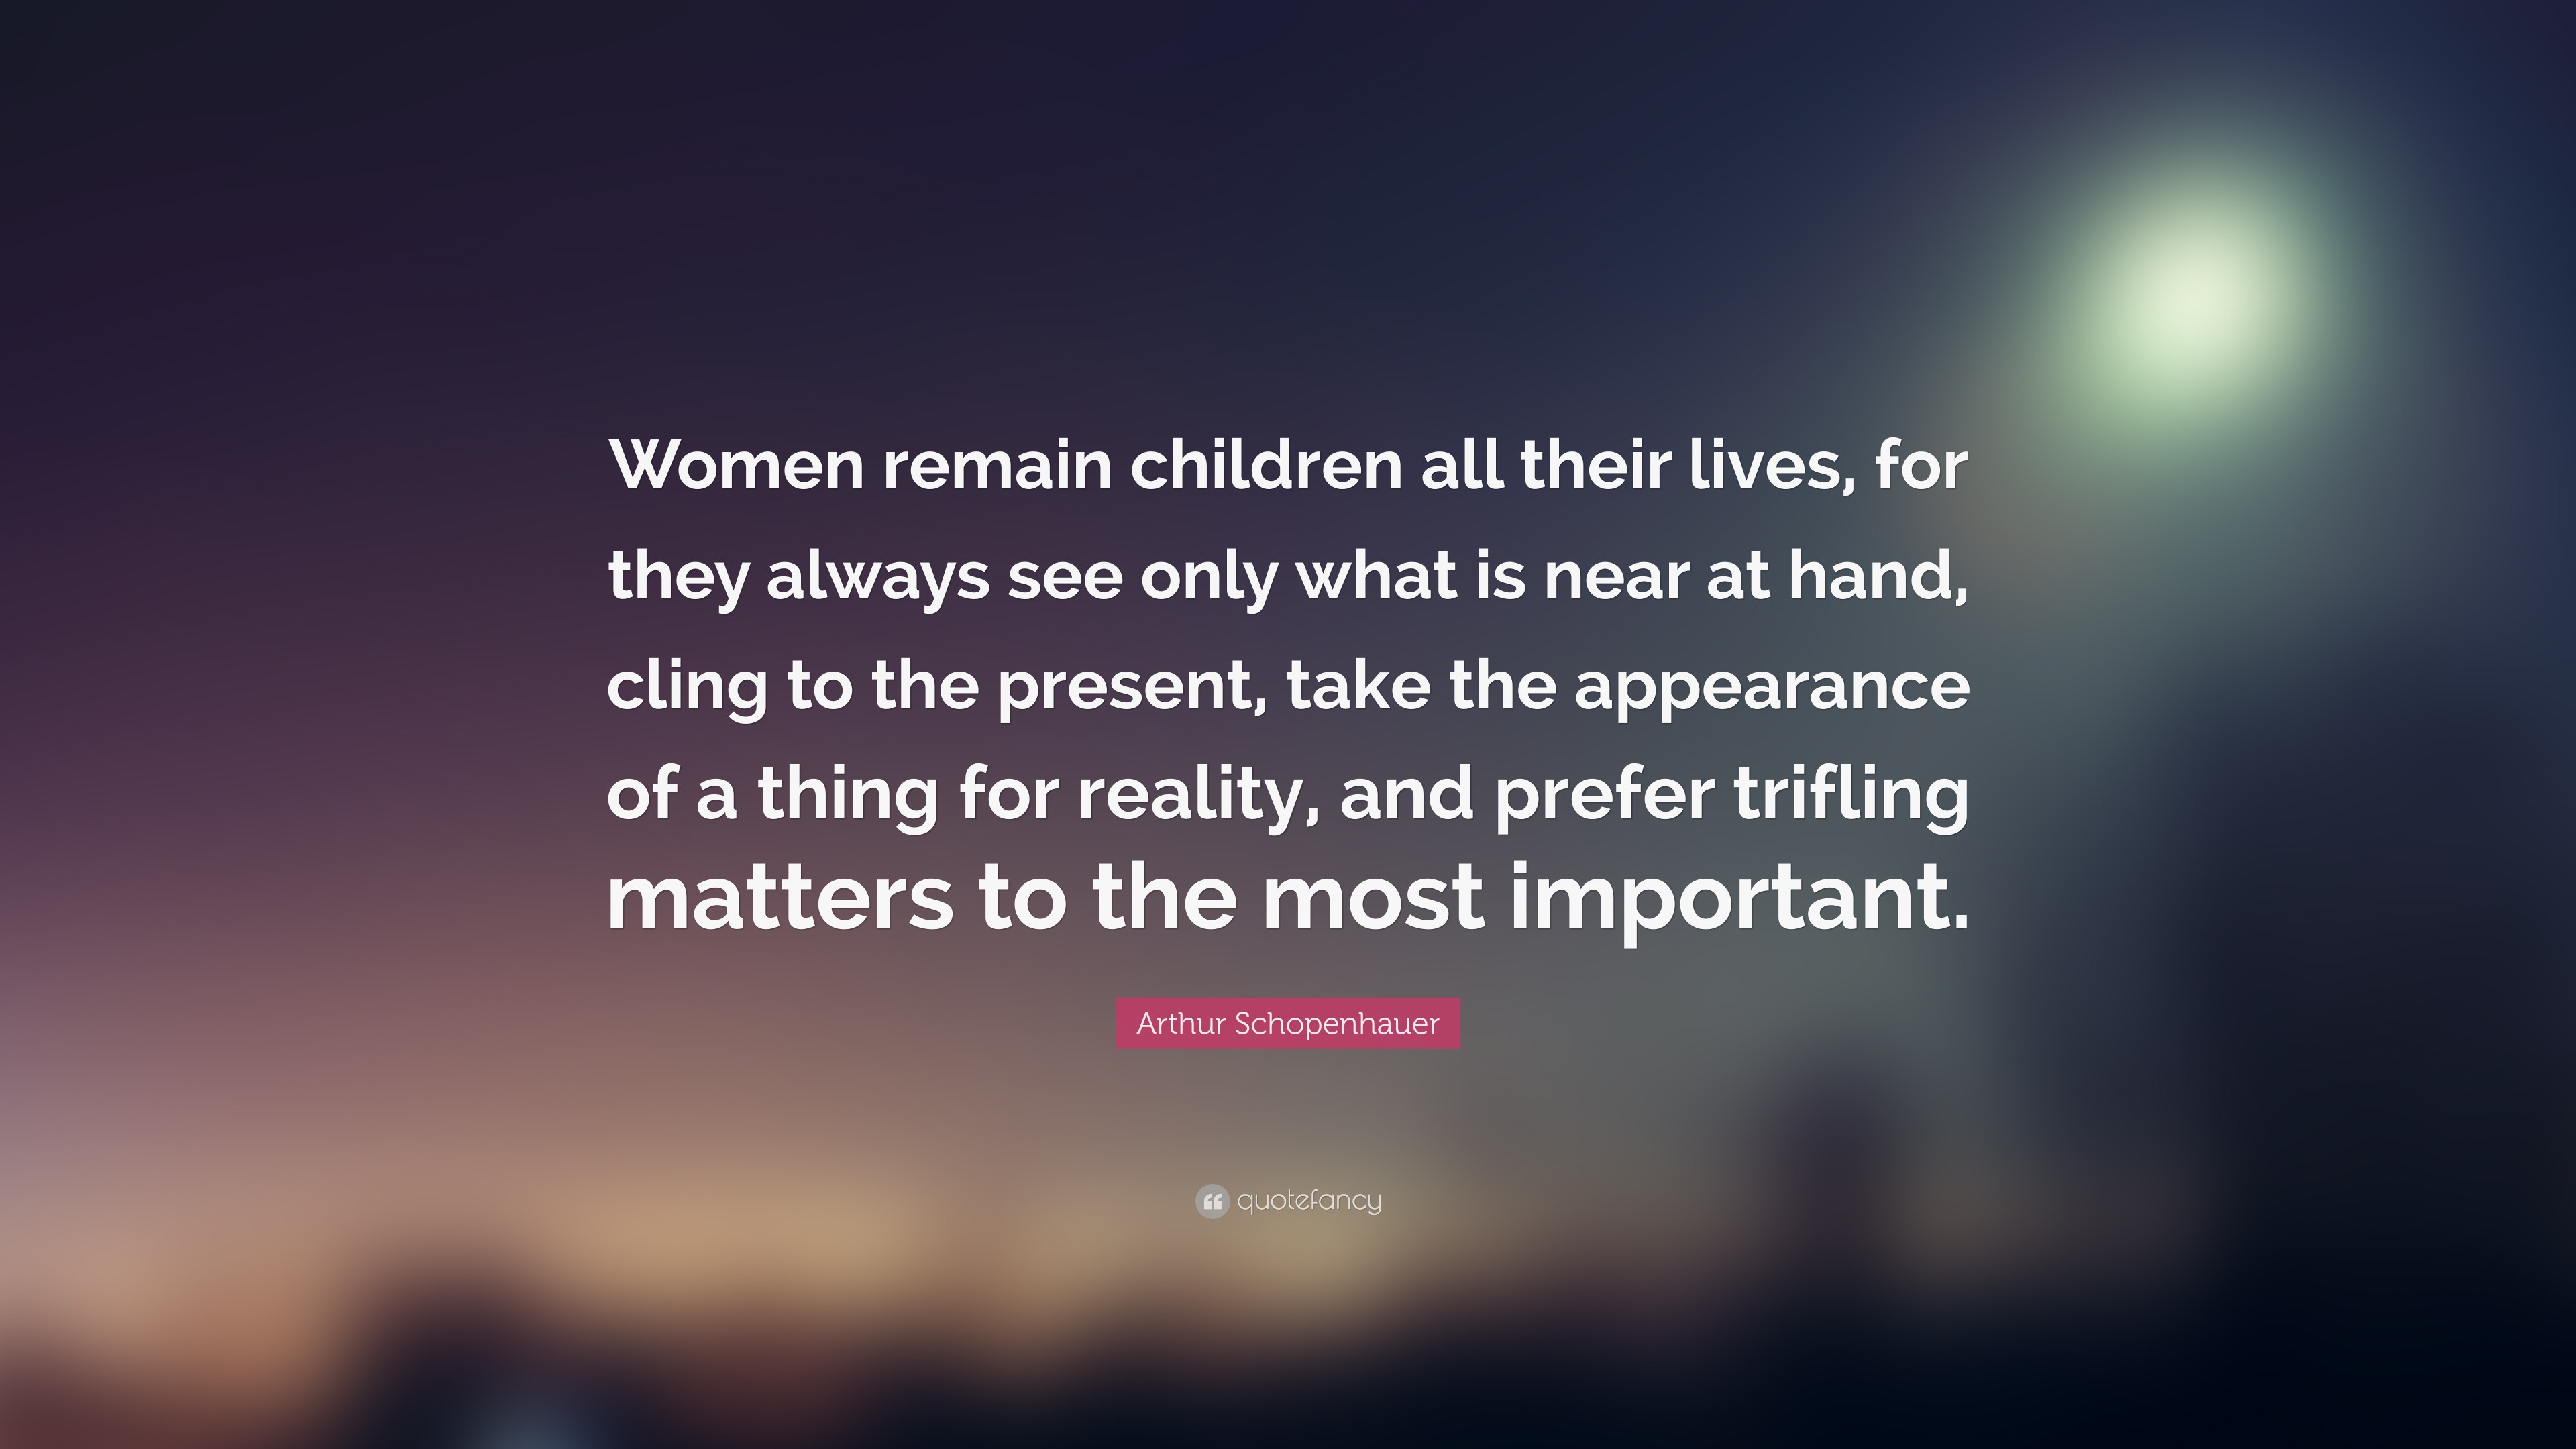 Arthur Schopenhauer Quote: “Women remain children all their lives, for